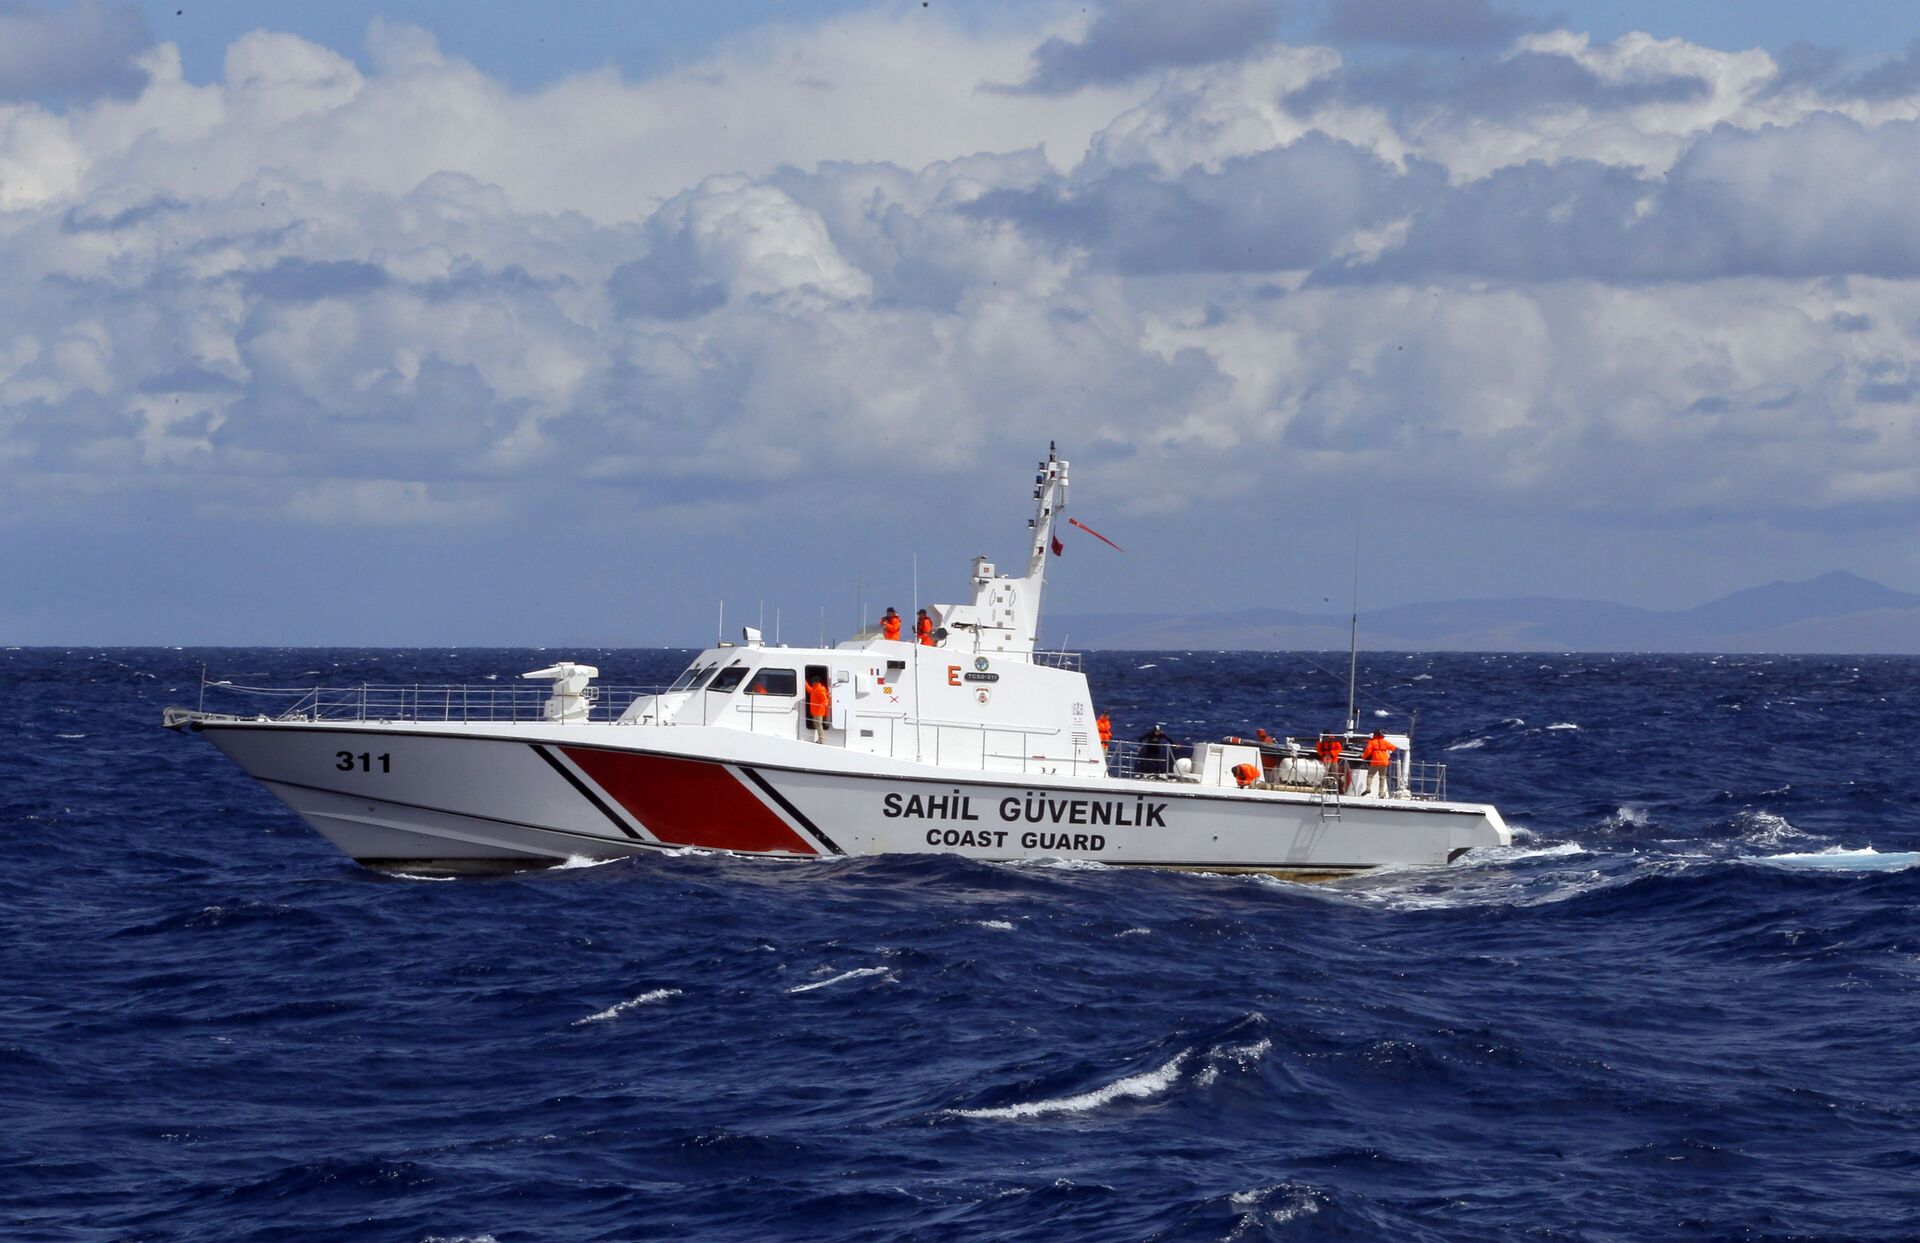 A Turkish Coast Guard vessel speeds during an exercise by the Turkish Coast Guard on the Aegean Sea near Izmir, Turkey, Wednesday, May 4, 2016 - Sputnik International, 1920, 07.09.2021